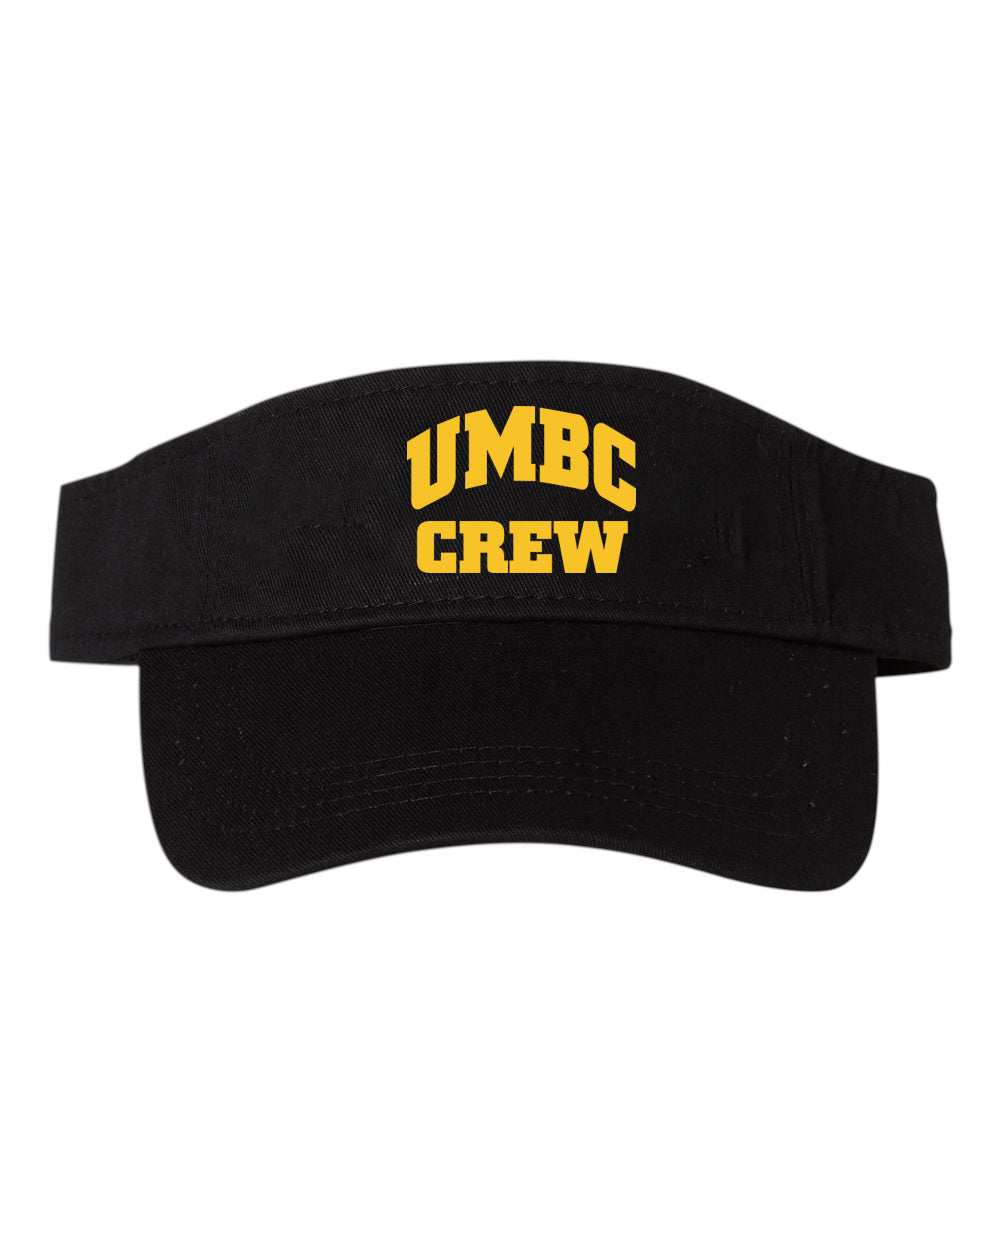 UMBC Crew Cotton Twill Visor